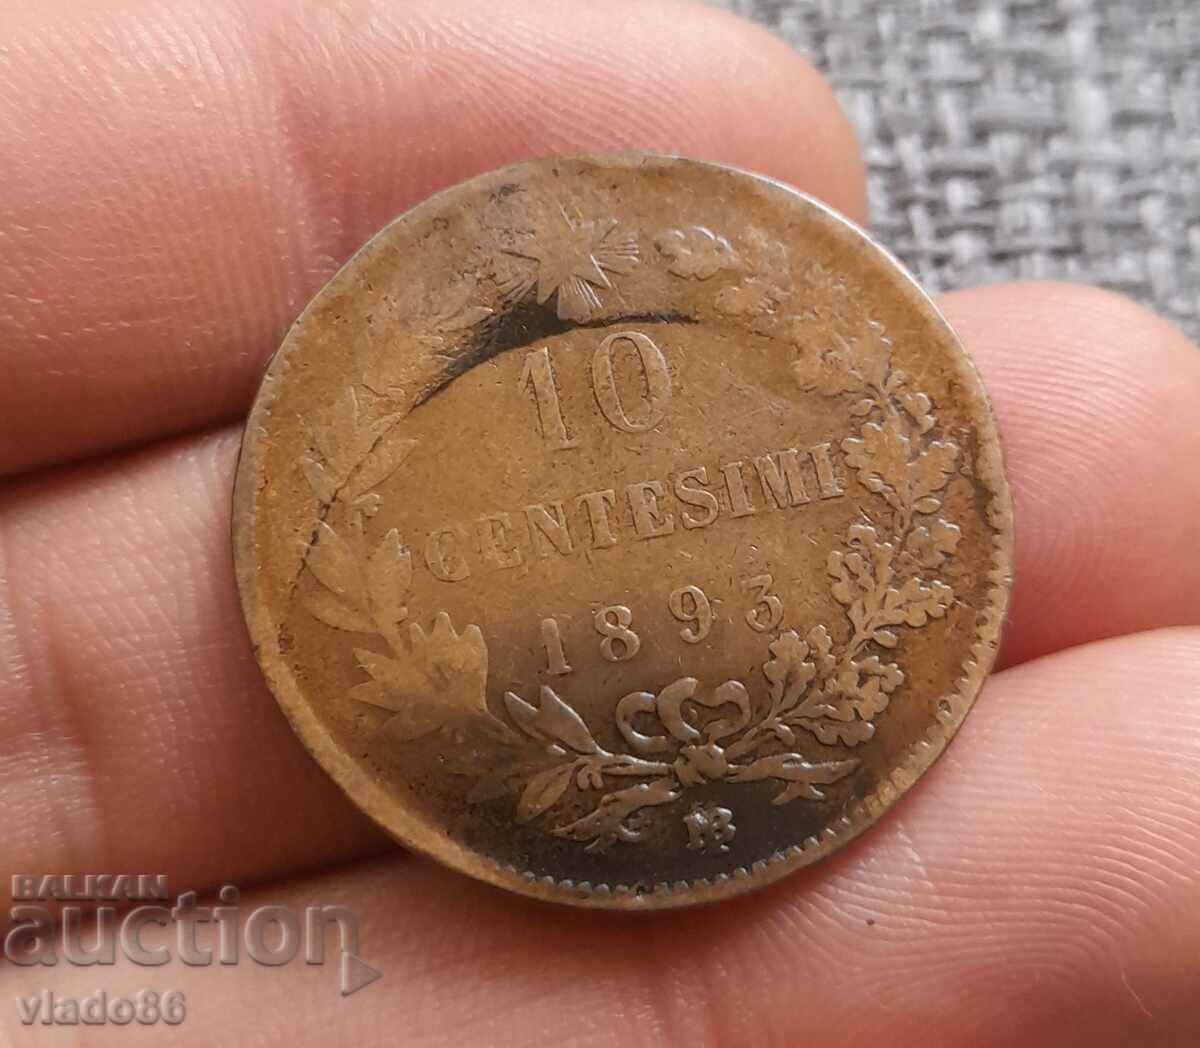 10 centesimi 1893